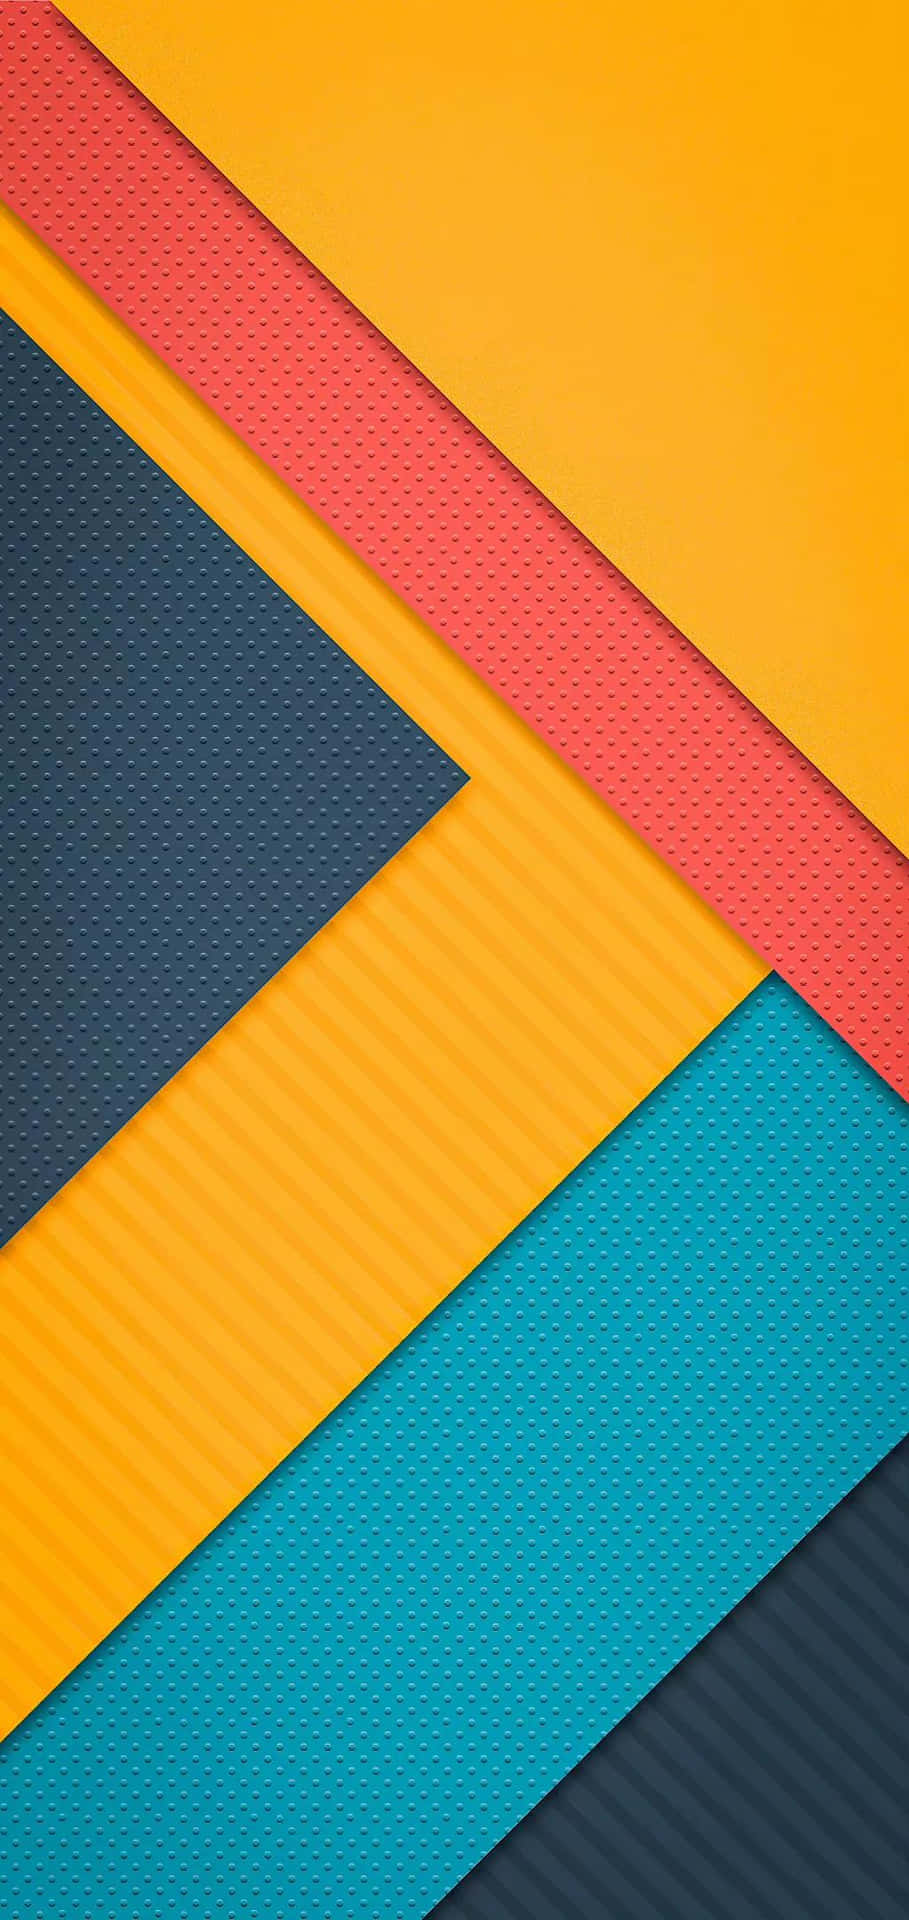 Geometric Colorful Succinct Phone Wallpaper